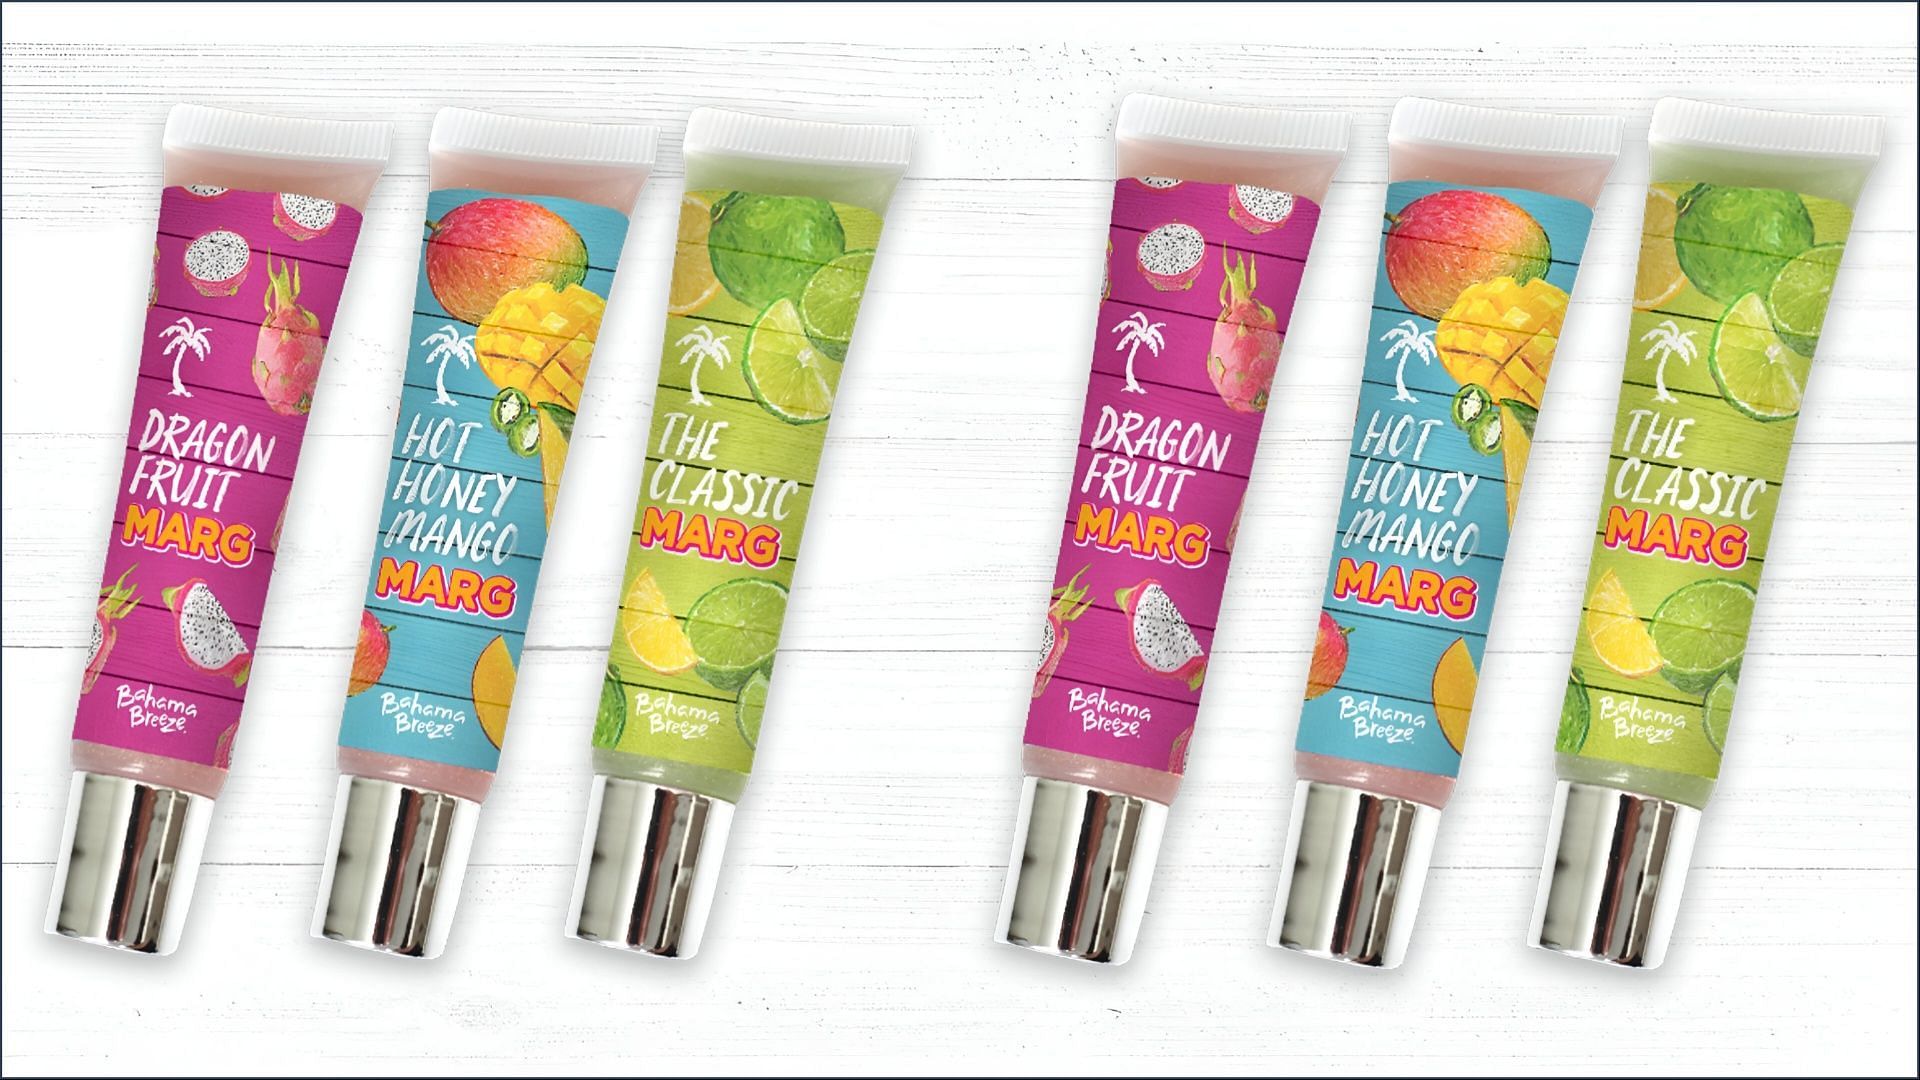 Bahama Freeze unveils lip glosses inspired from classic margaritas (Image via Bahama Breeze)